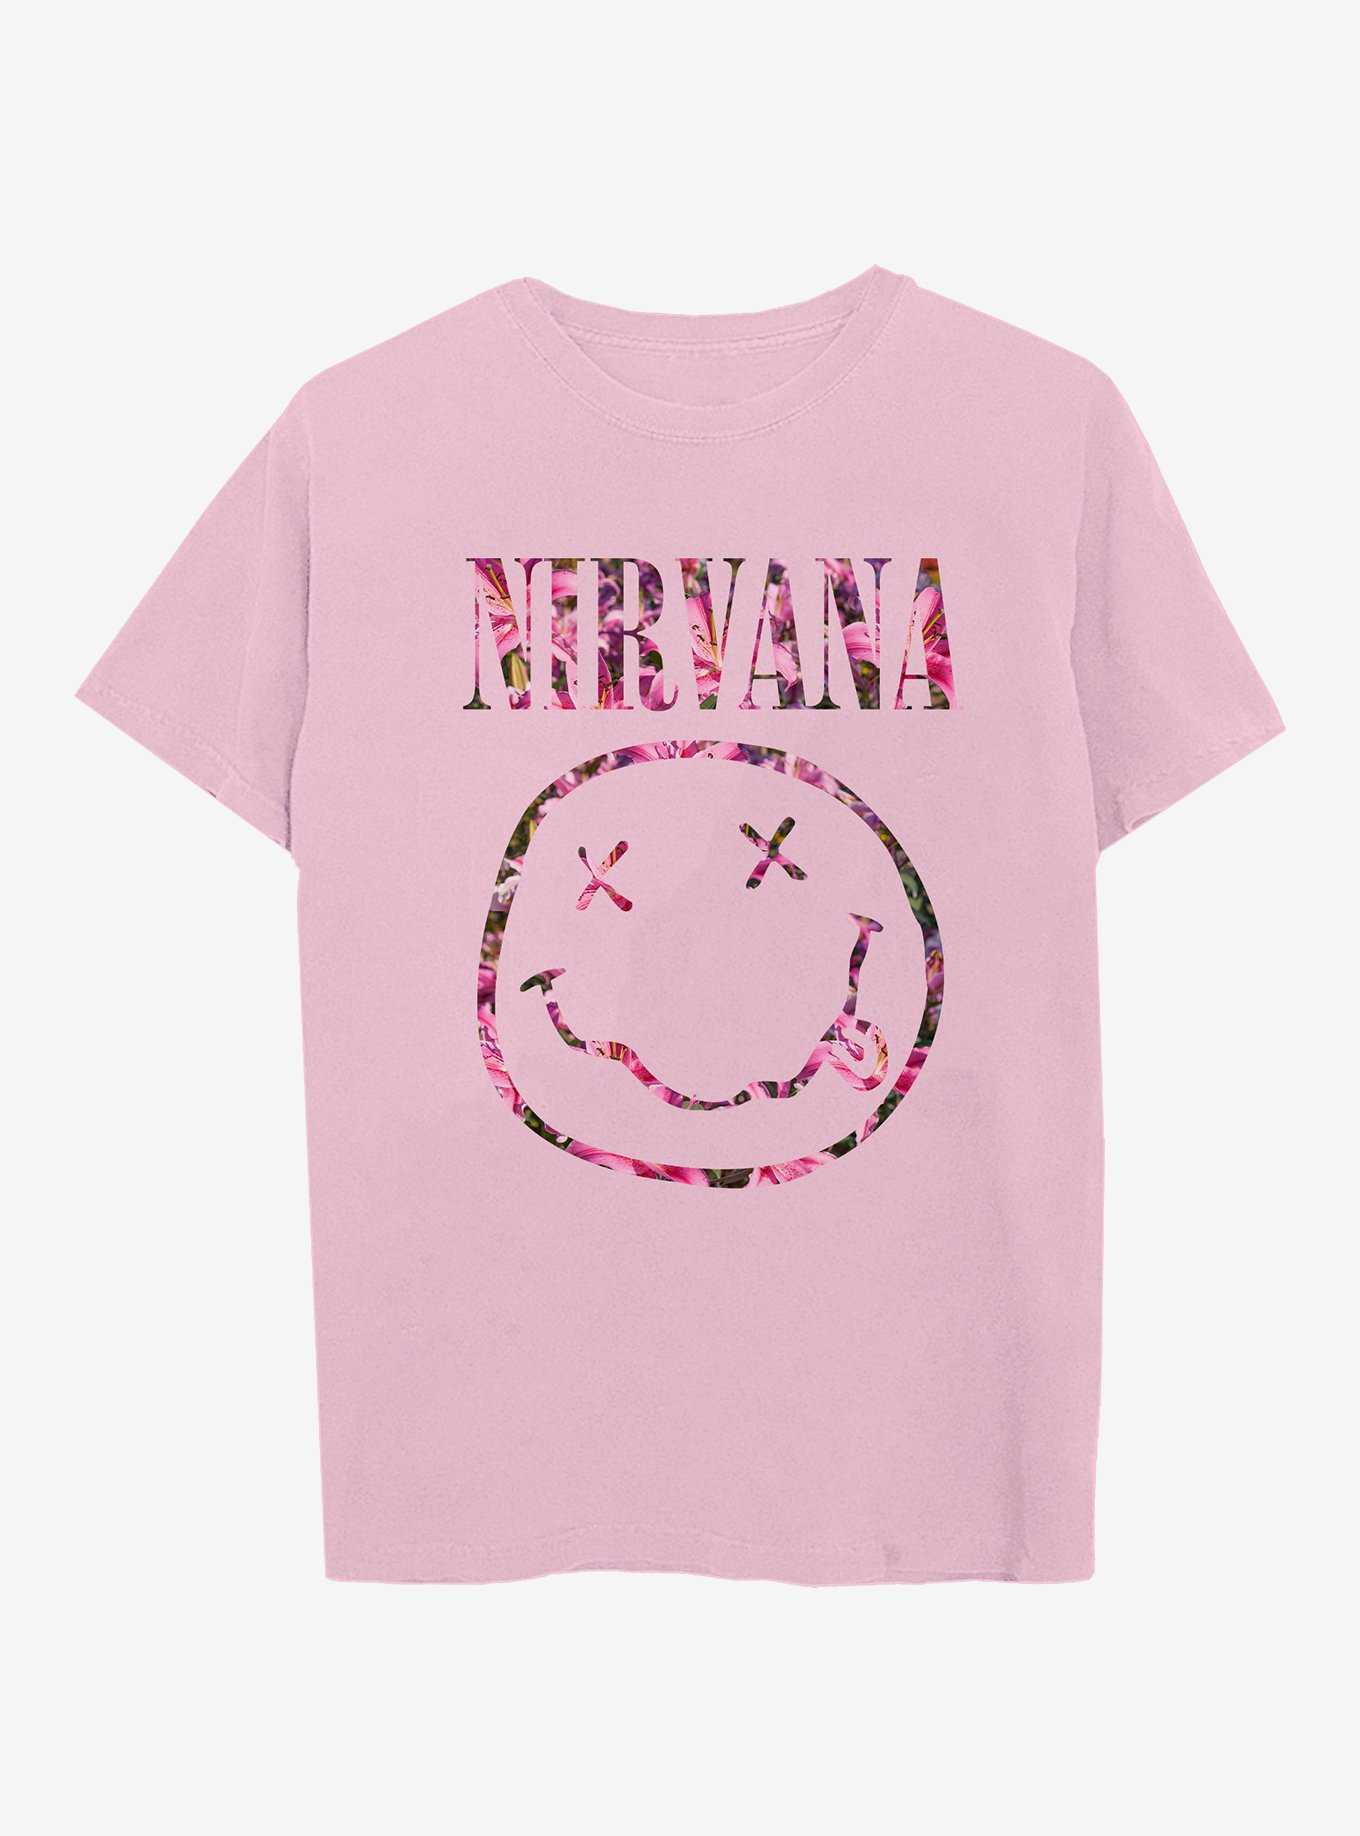 Nirvana Floral Smile Logo Boyfriend Fit Girls T-Shirt, PINK, hi-res